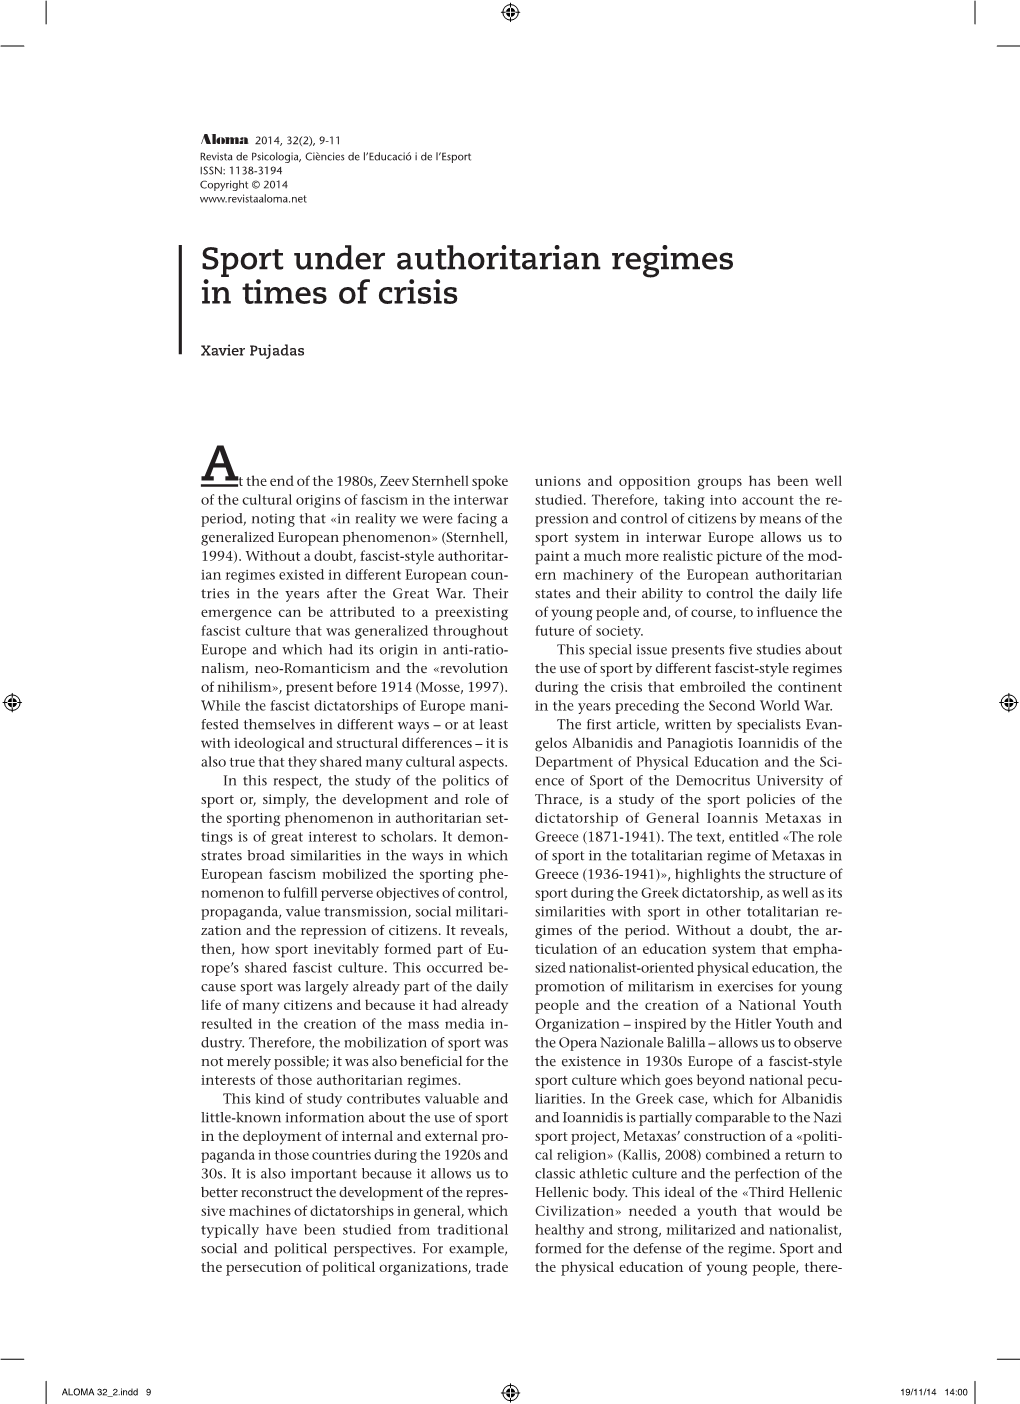 Sport Under Authoritarian Regimes in Times of Crisis